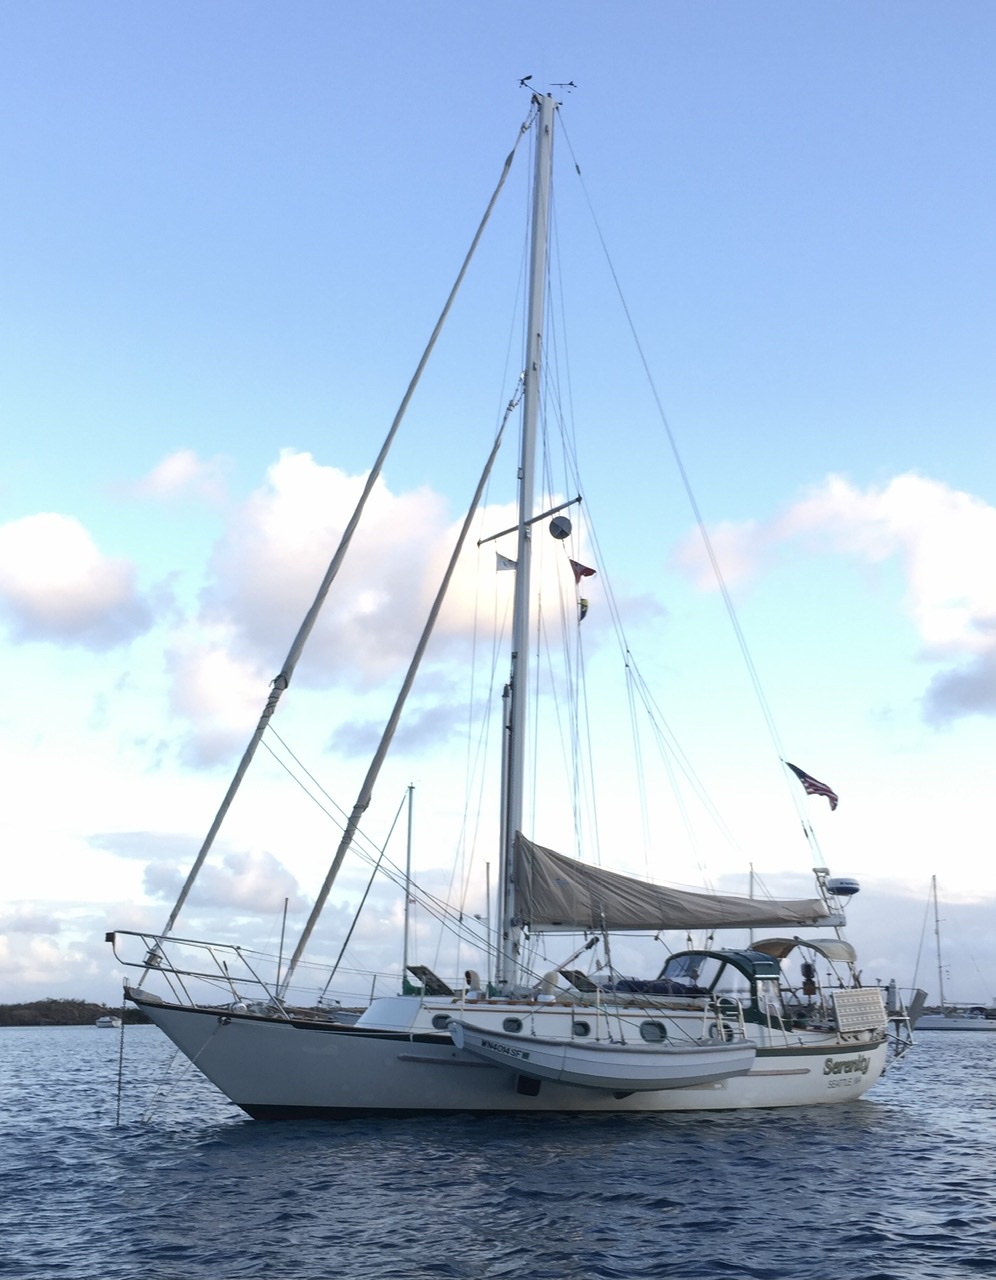 SV Serenity with nesting dinghy USVI April 2019.